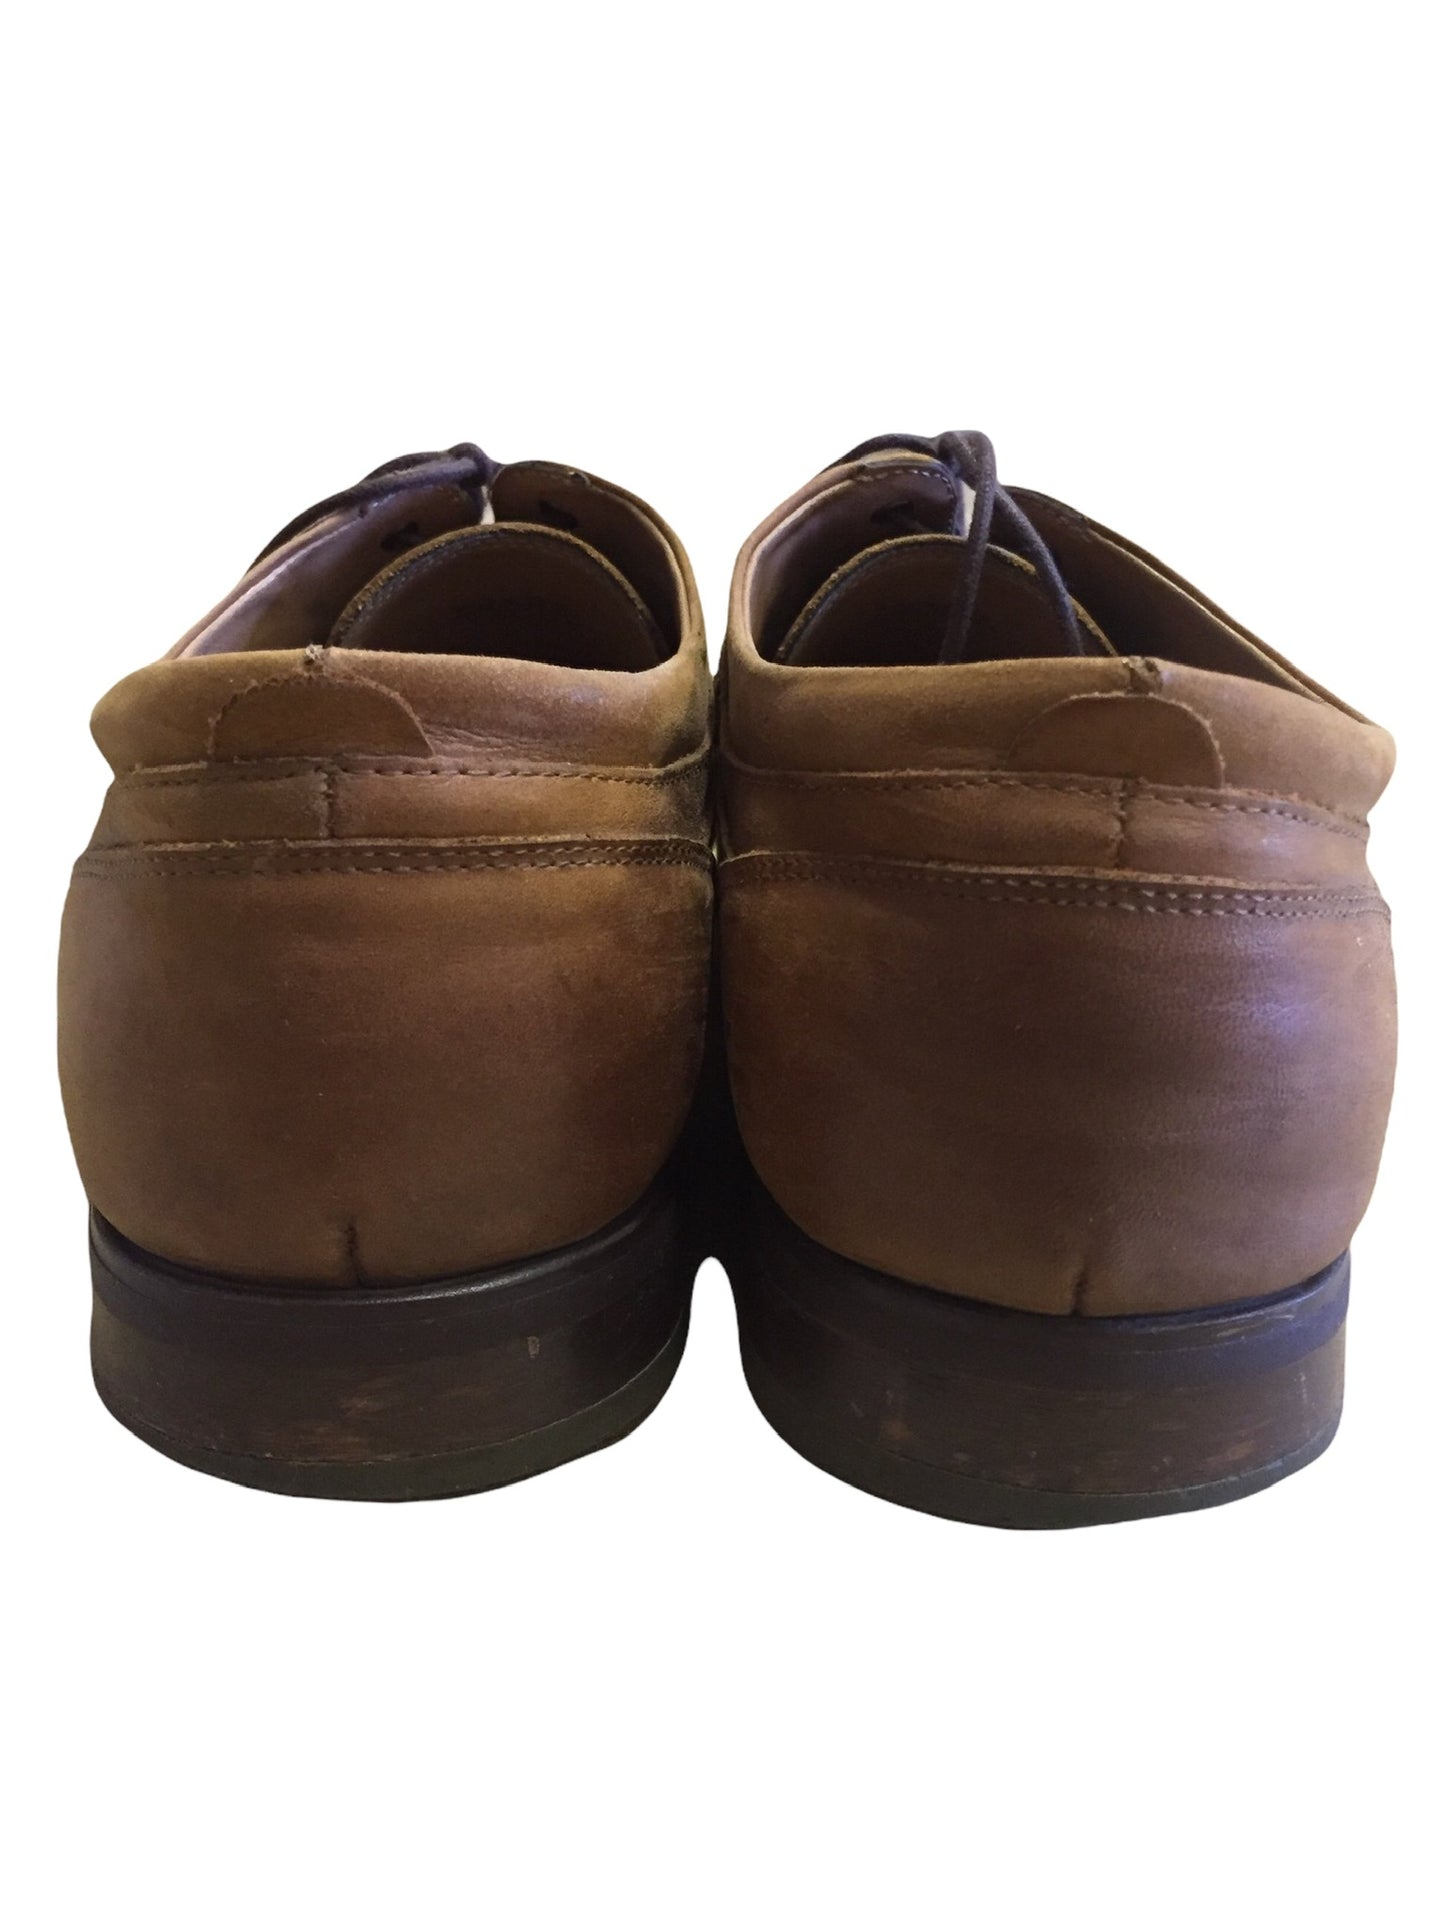 Aldo Light Brown Leather Dress Shoes Size 9 1/2